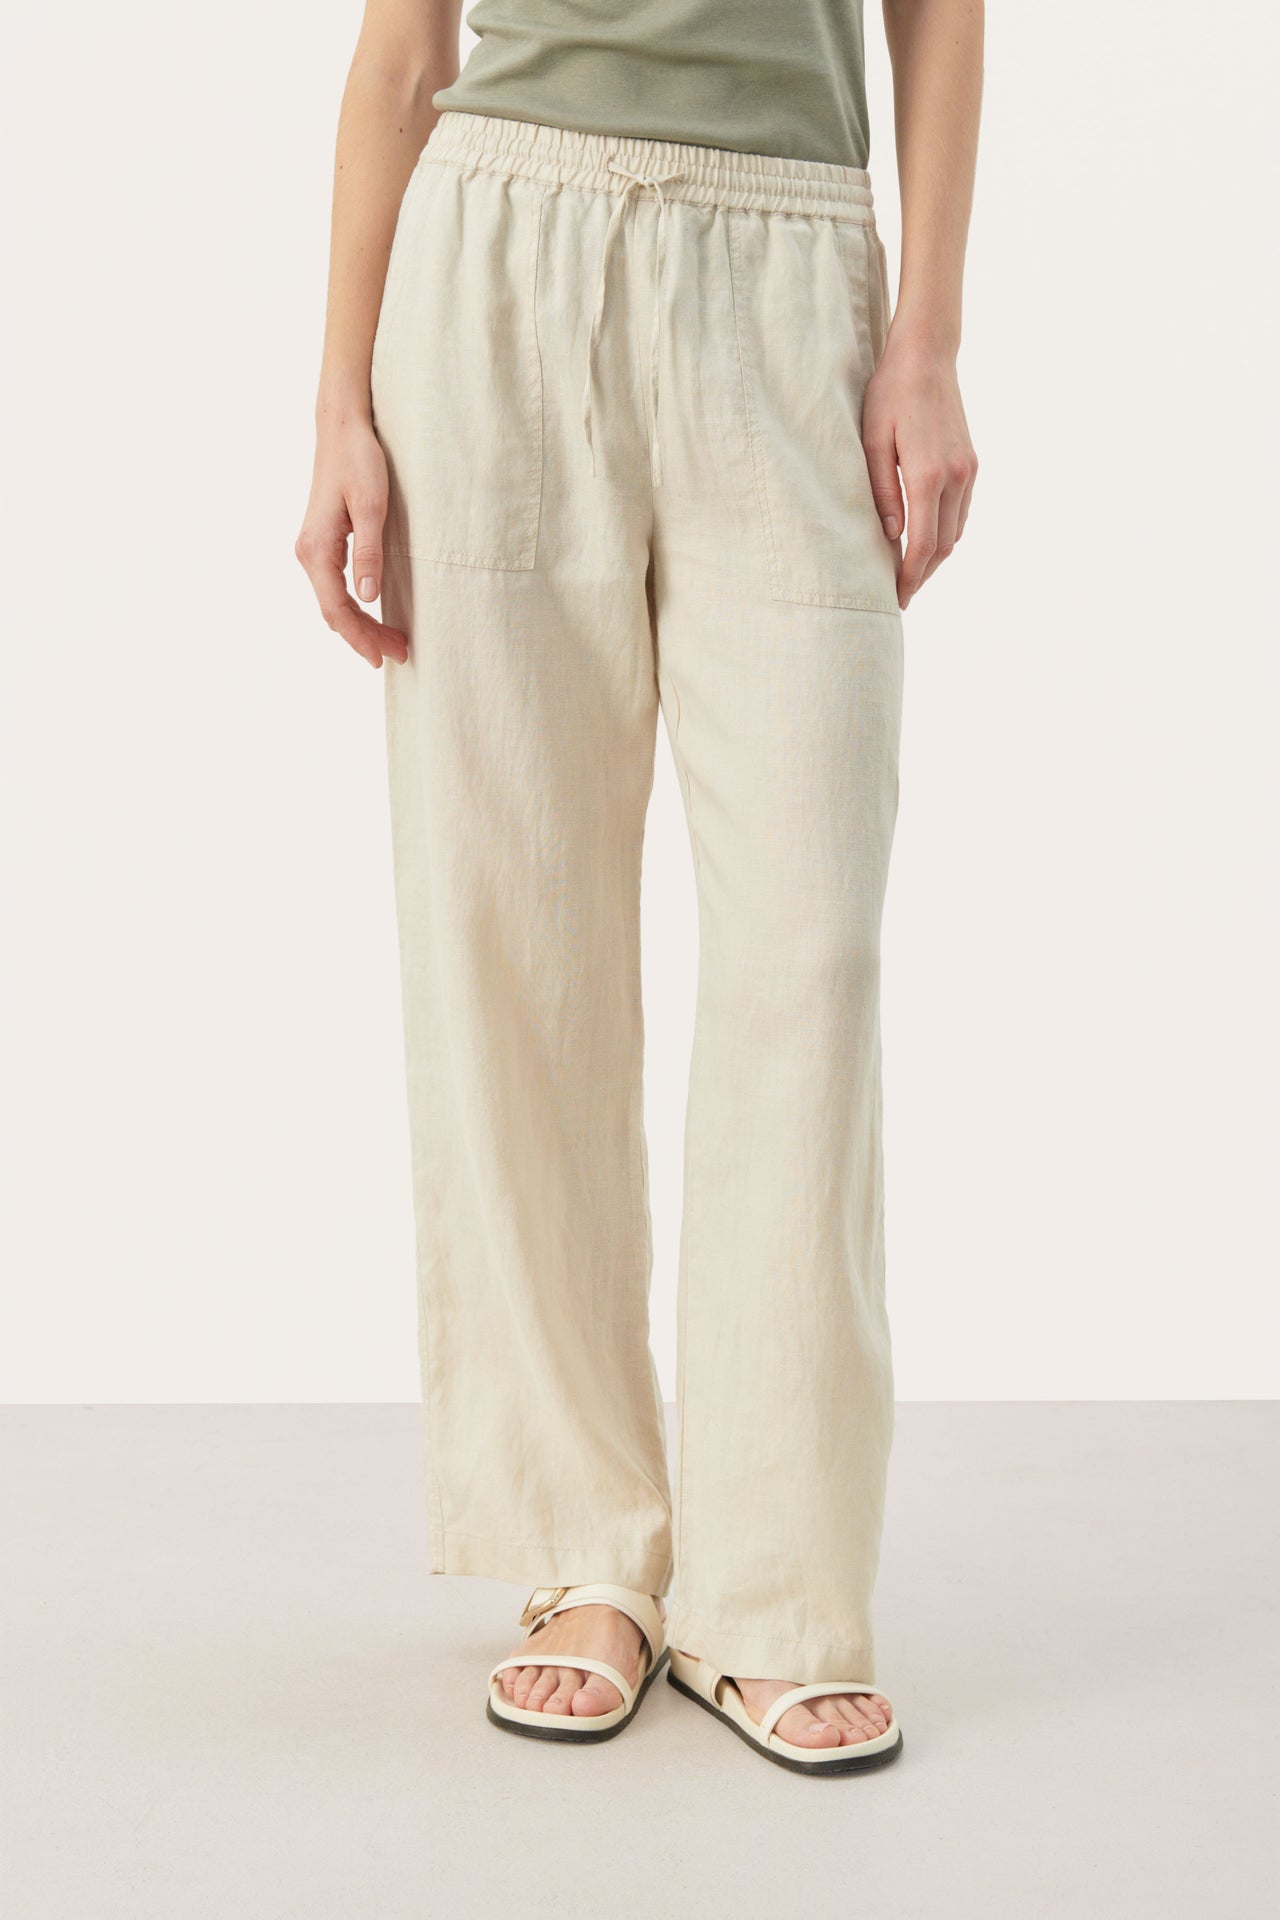  VILIGO Khaki Pants for Women Water Resistant Elastic Wasit  Loose Fit Outdoor Pants Khaki XS : Clothing, Shoes & Jewelry